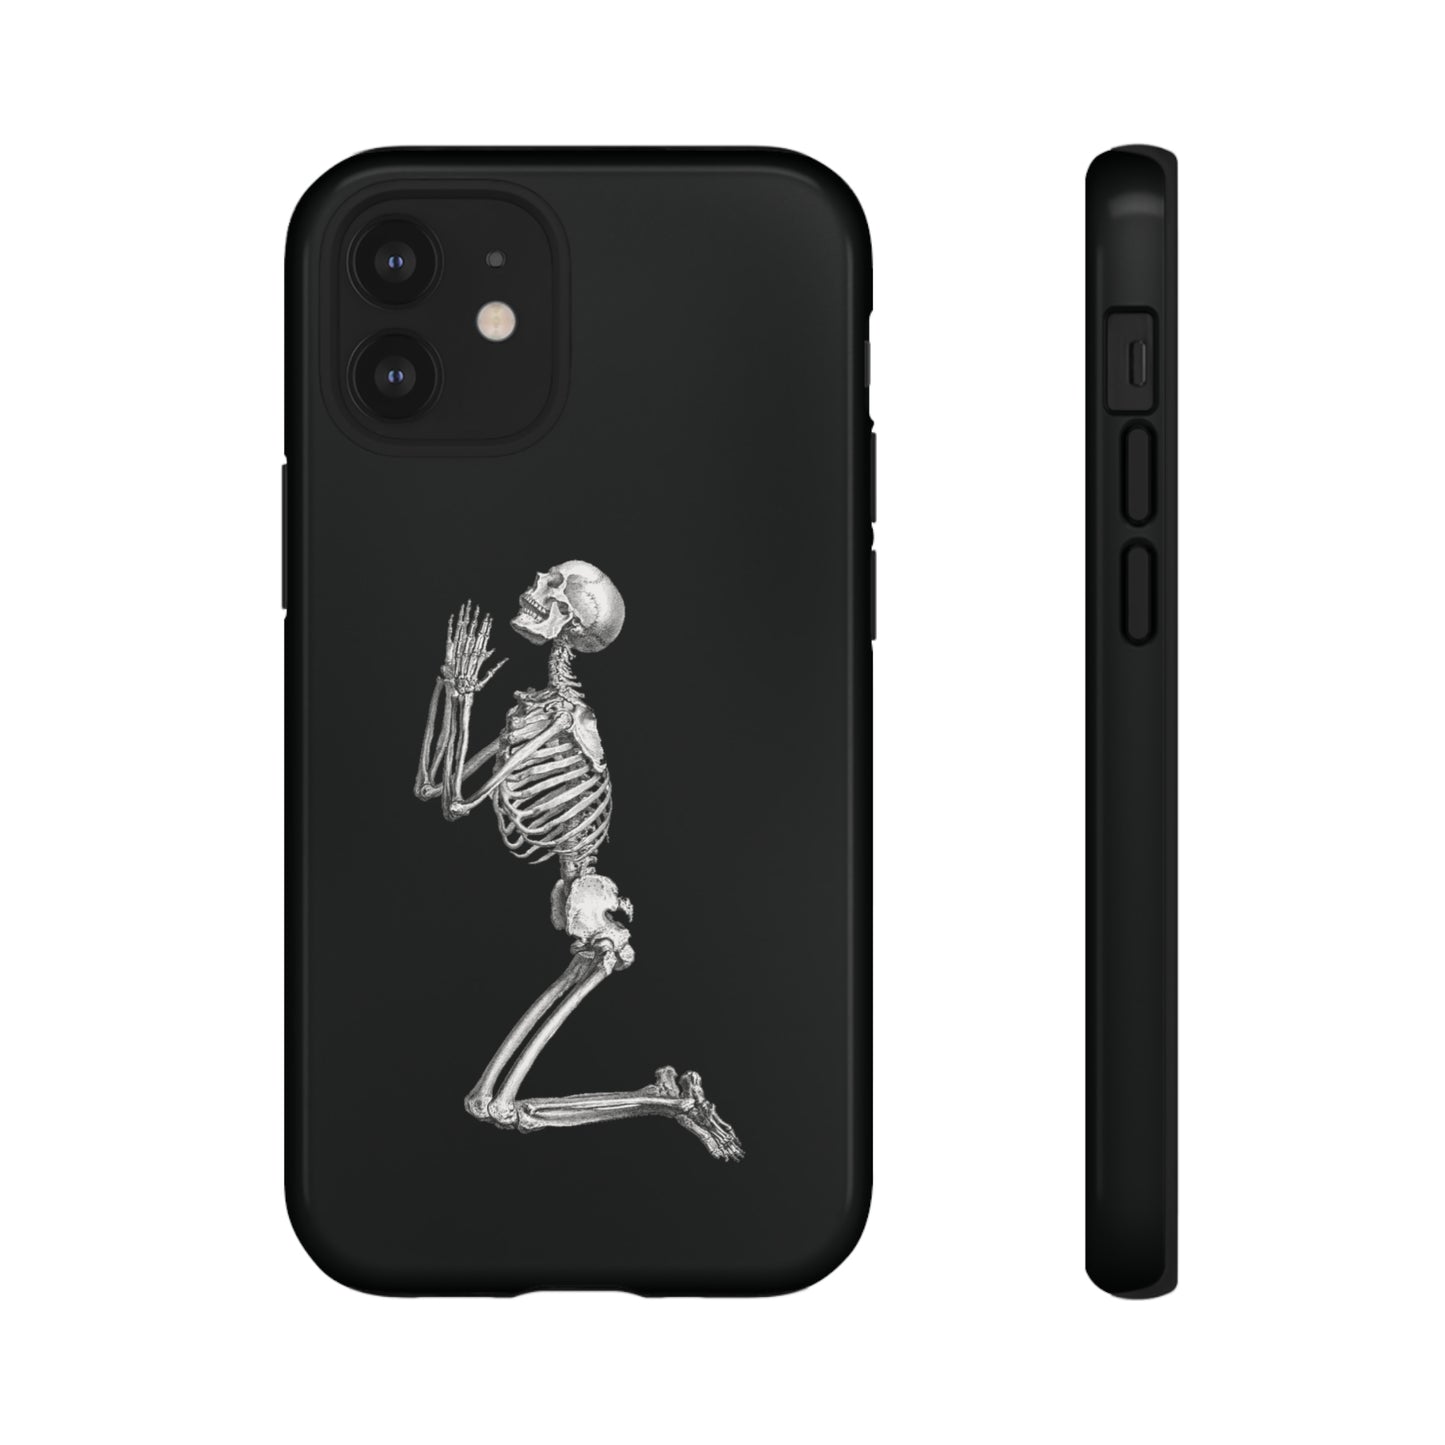 iPhone Case: Spooky Season